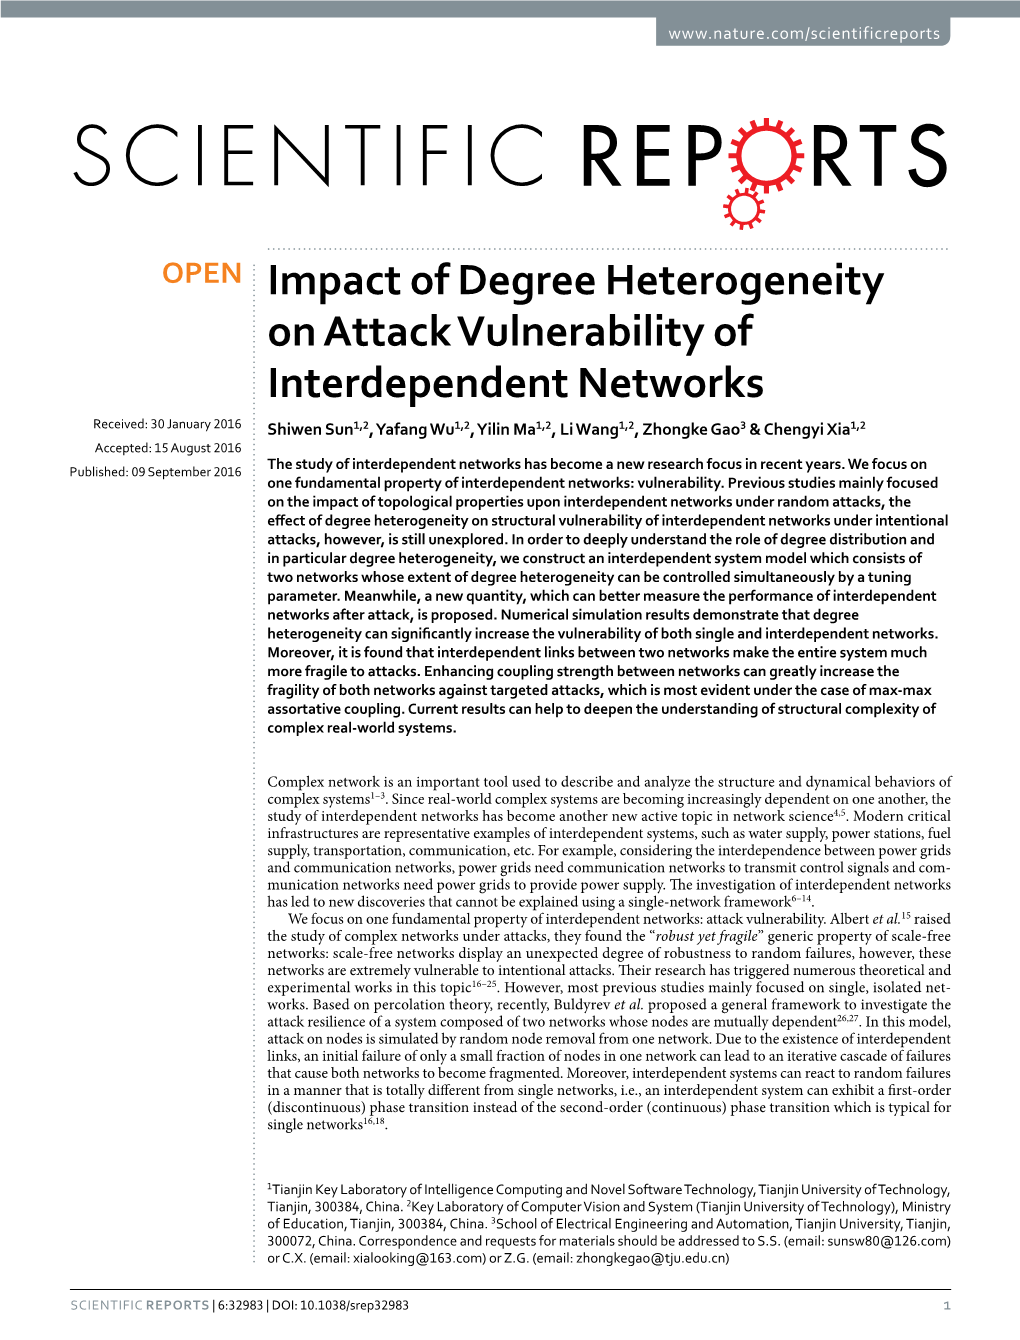 Impact of Degree Heterogeneity on Attack Vulnerability